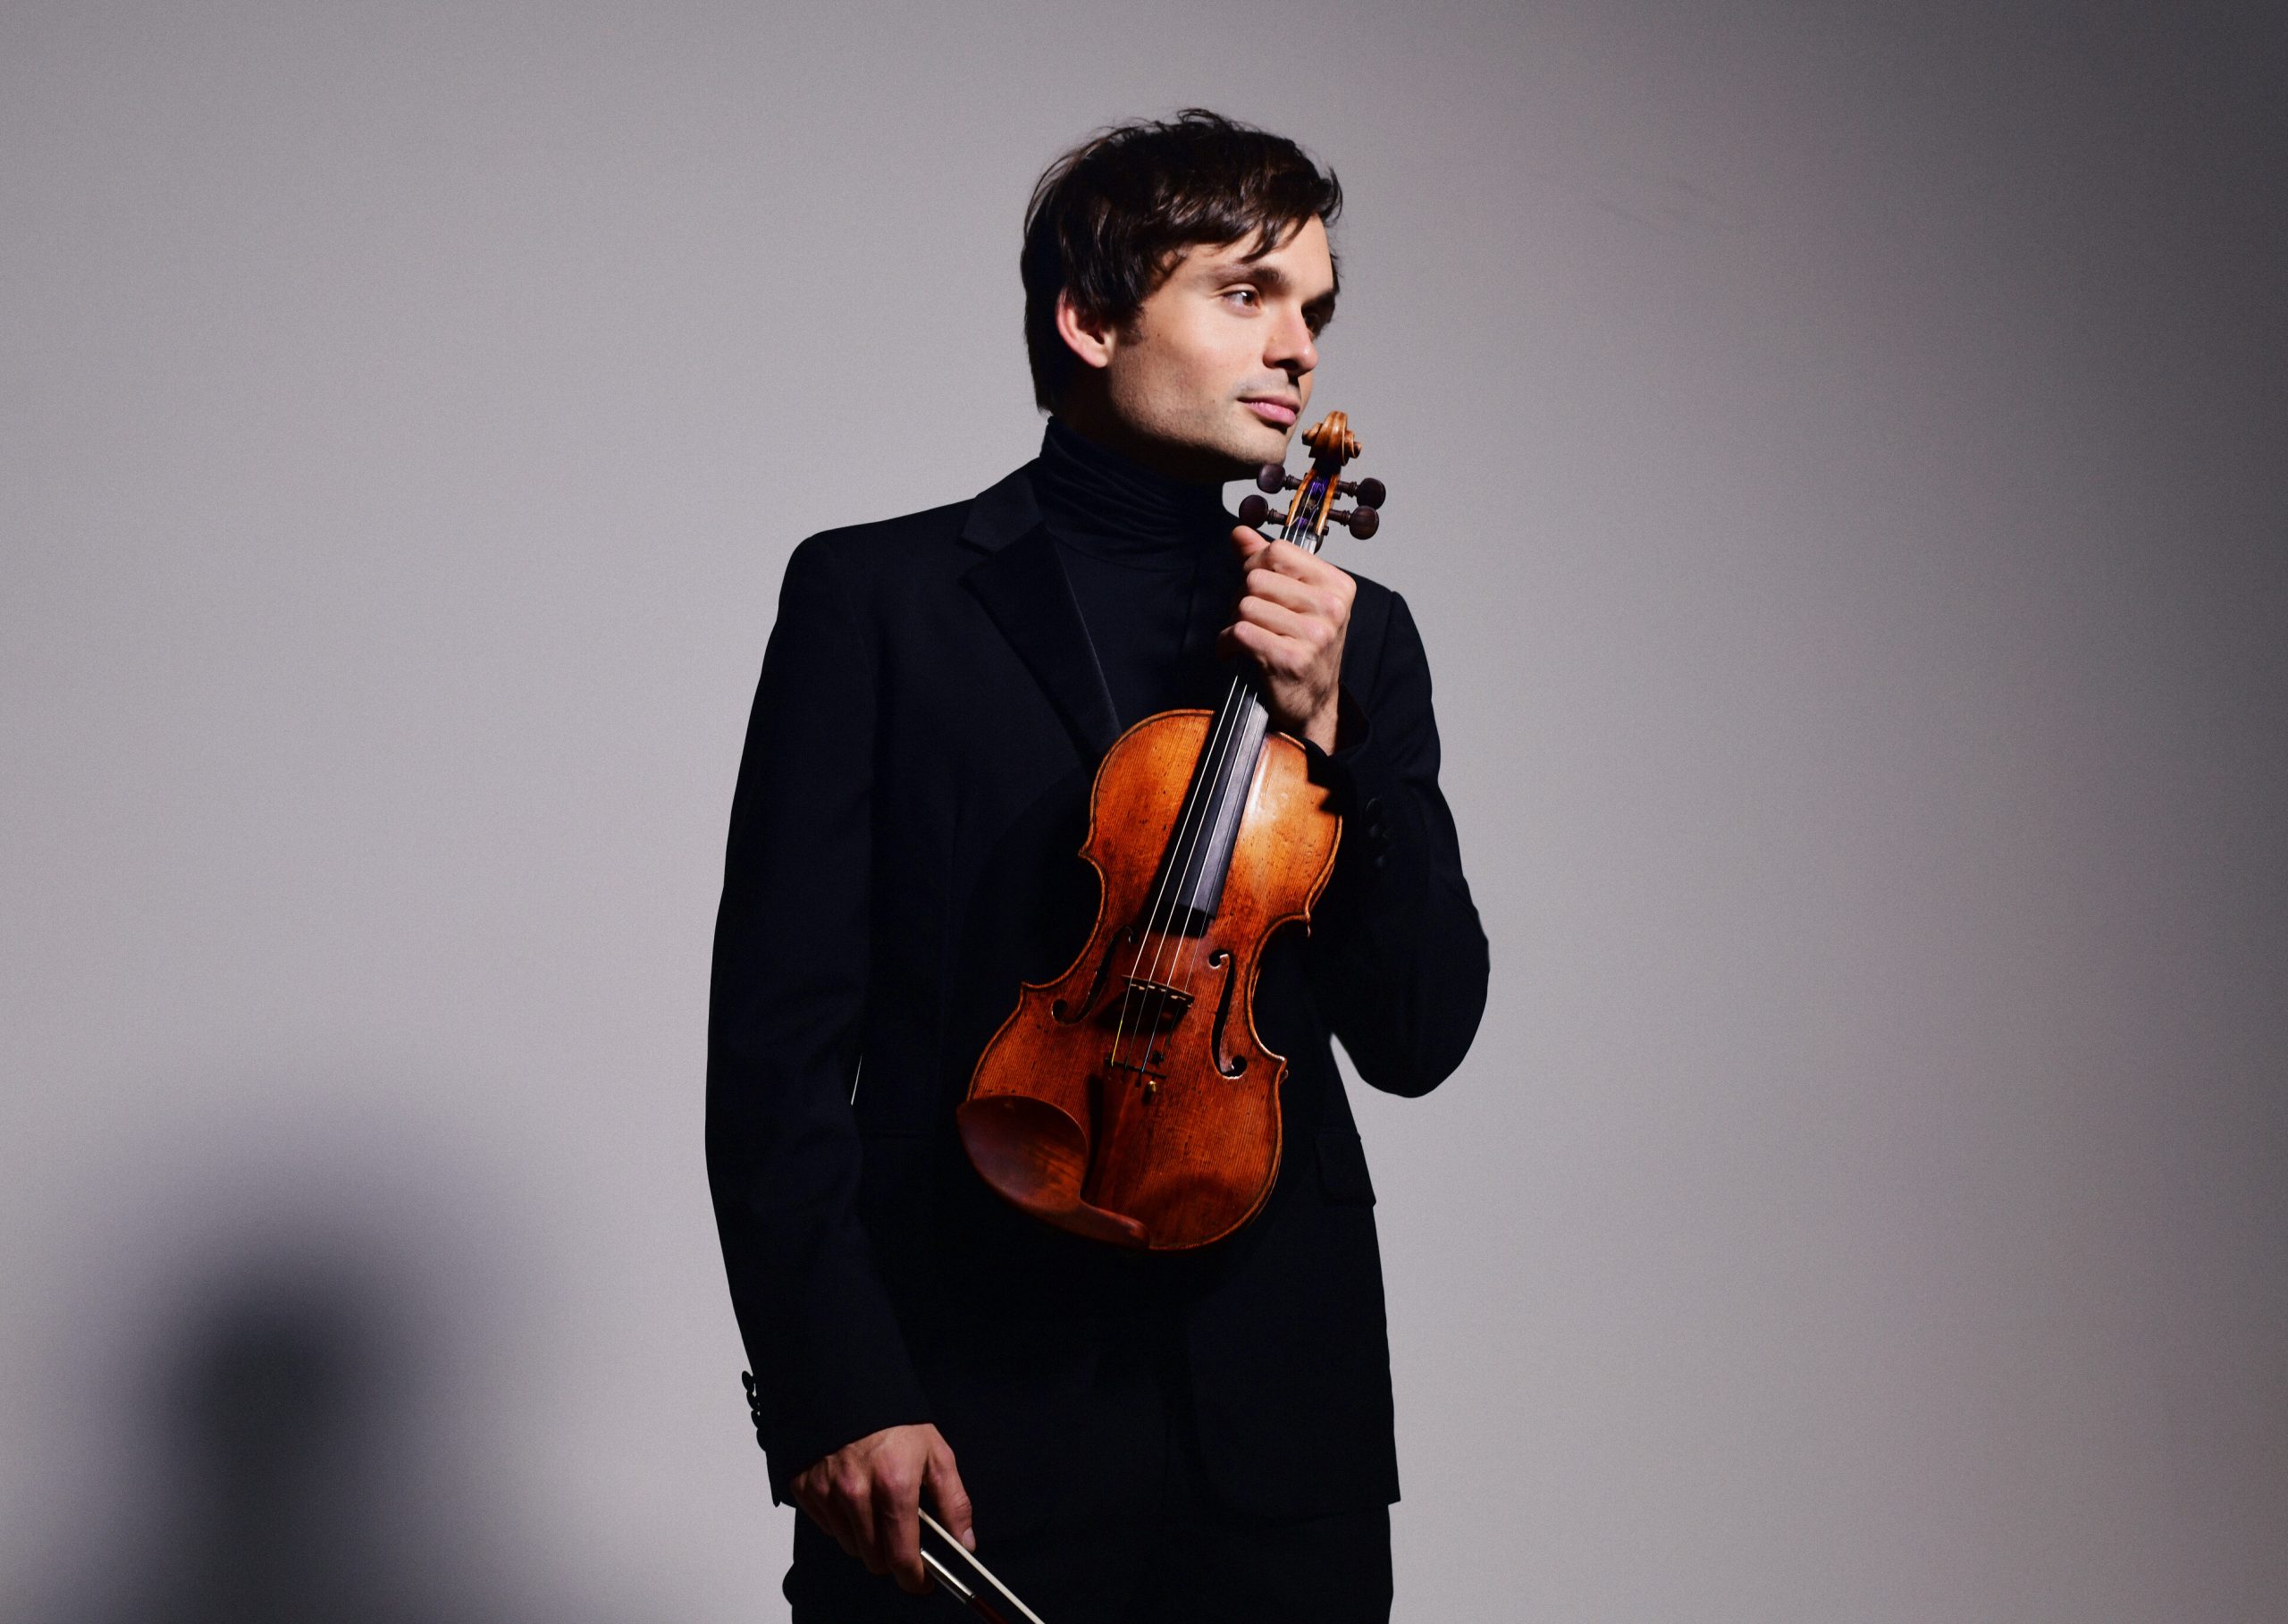 Francisco Fullana, violin